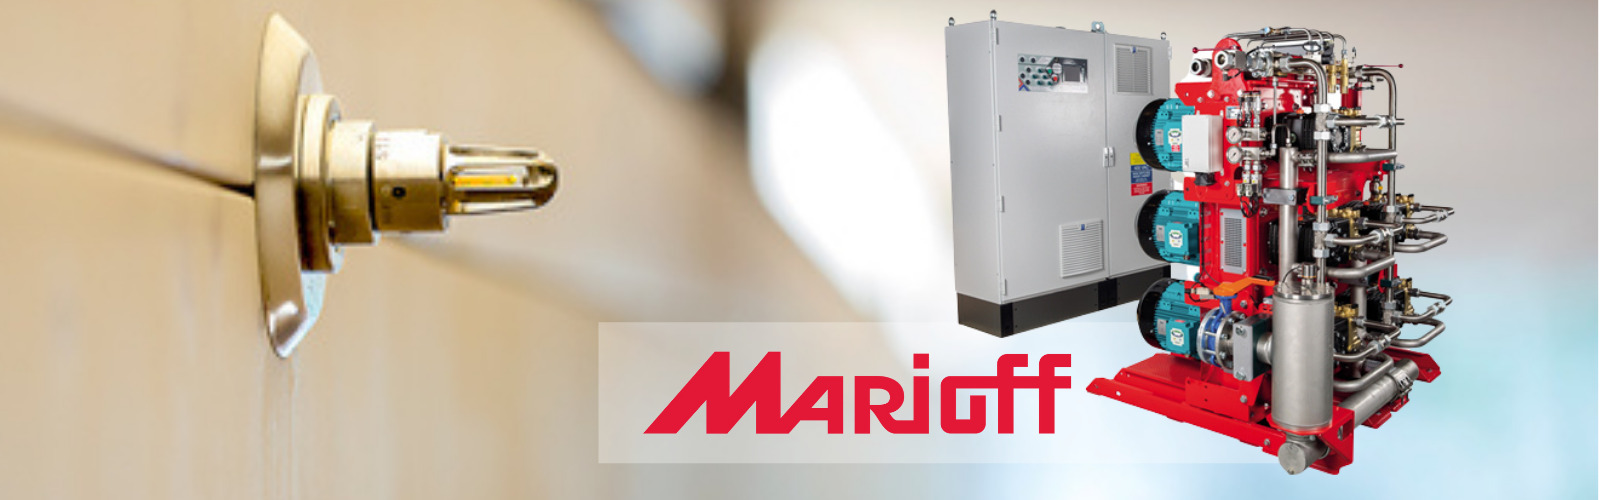 Marioff HI FOG Water Mist Systems & Components